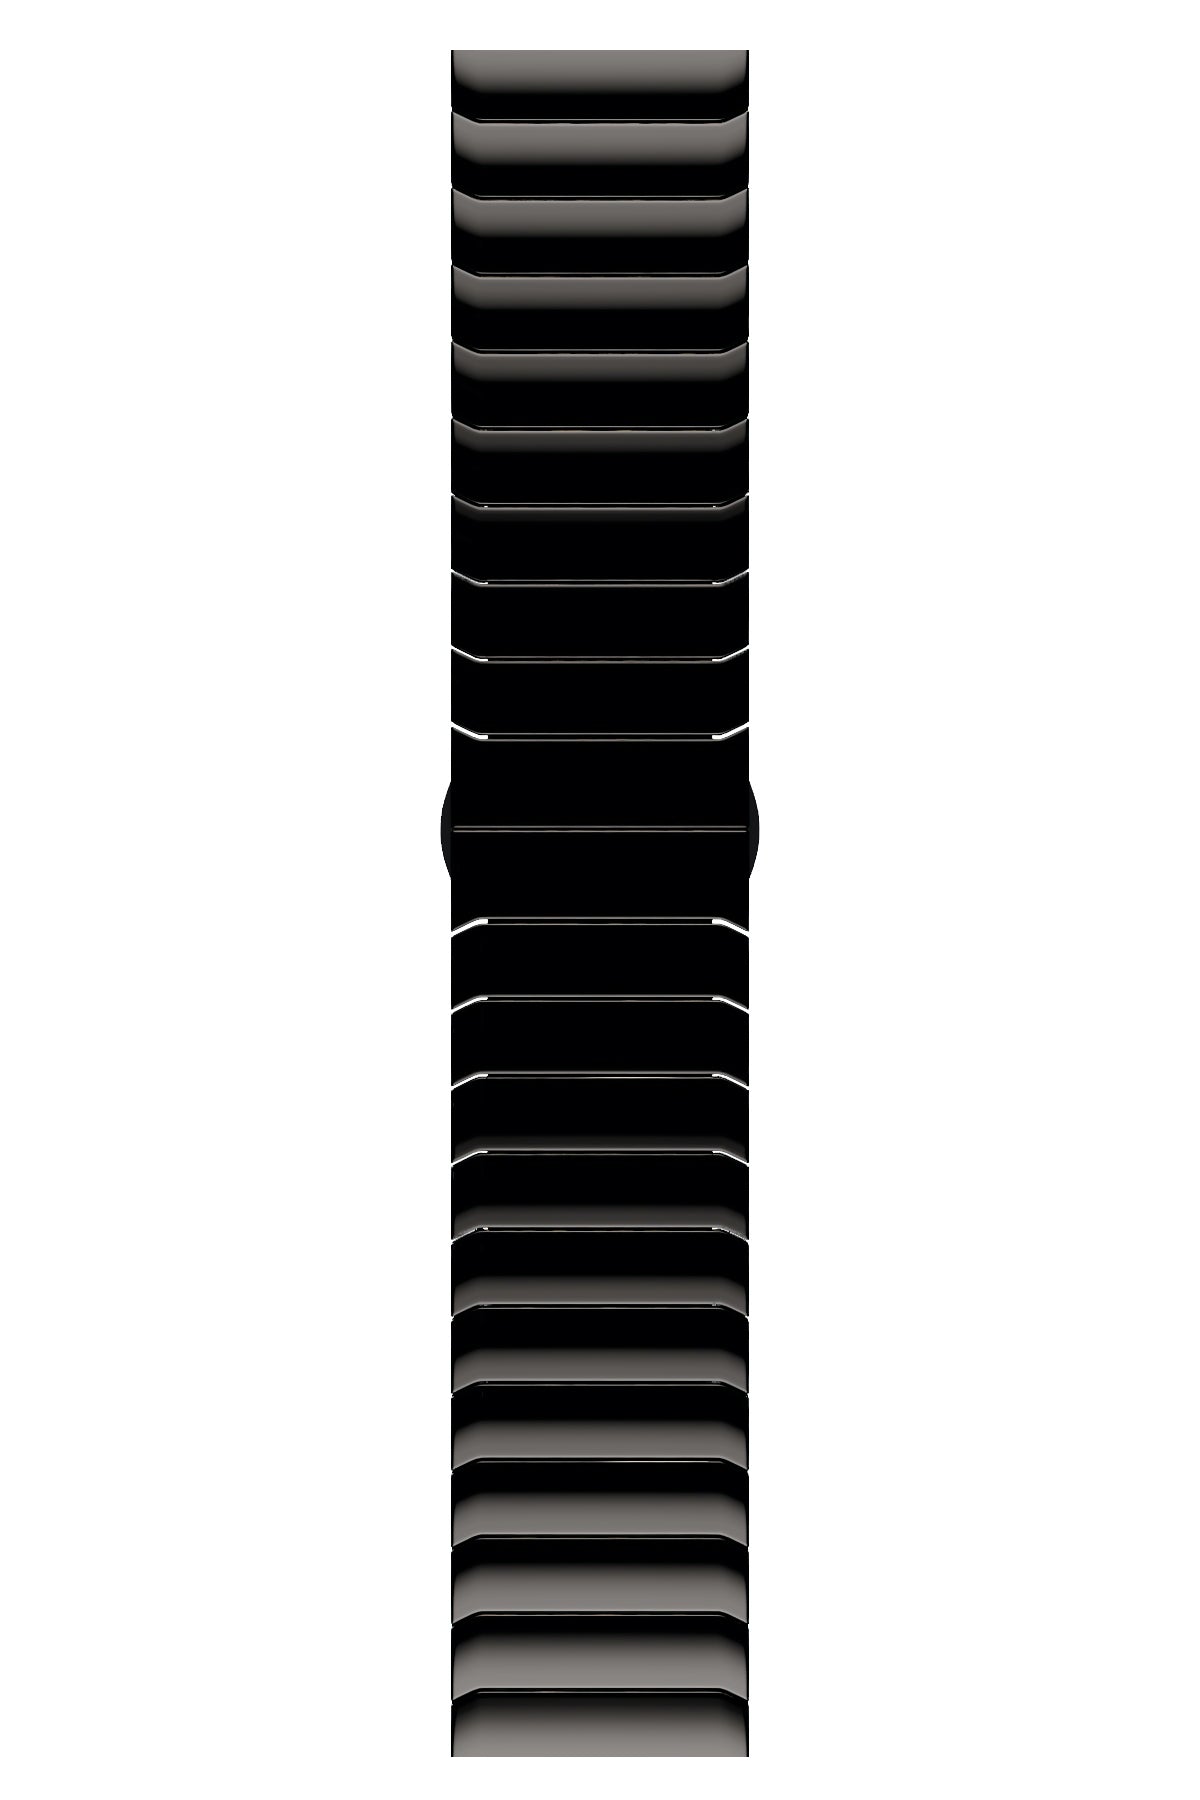 Apple Watch Compatible Ceramic Loop Band Black 